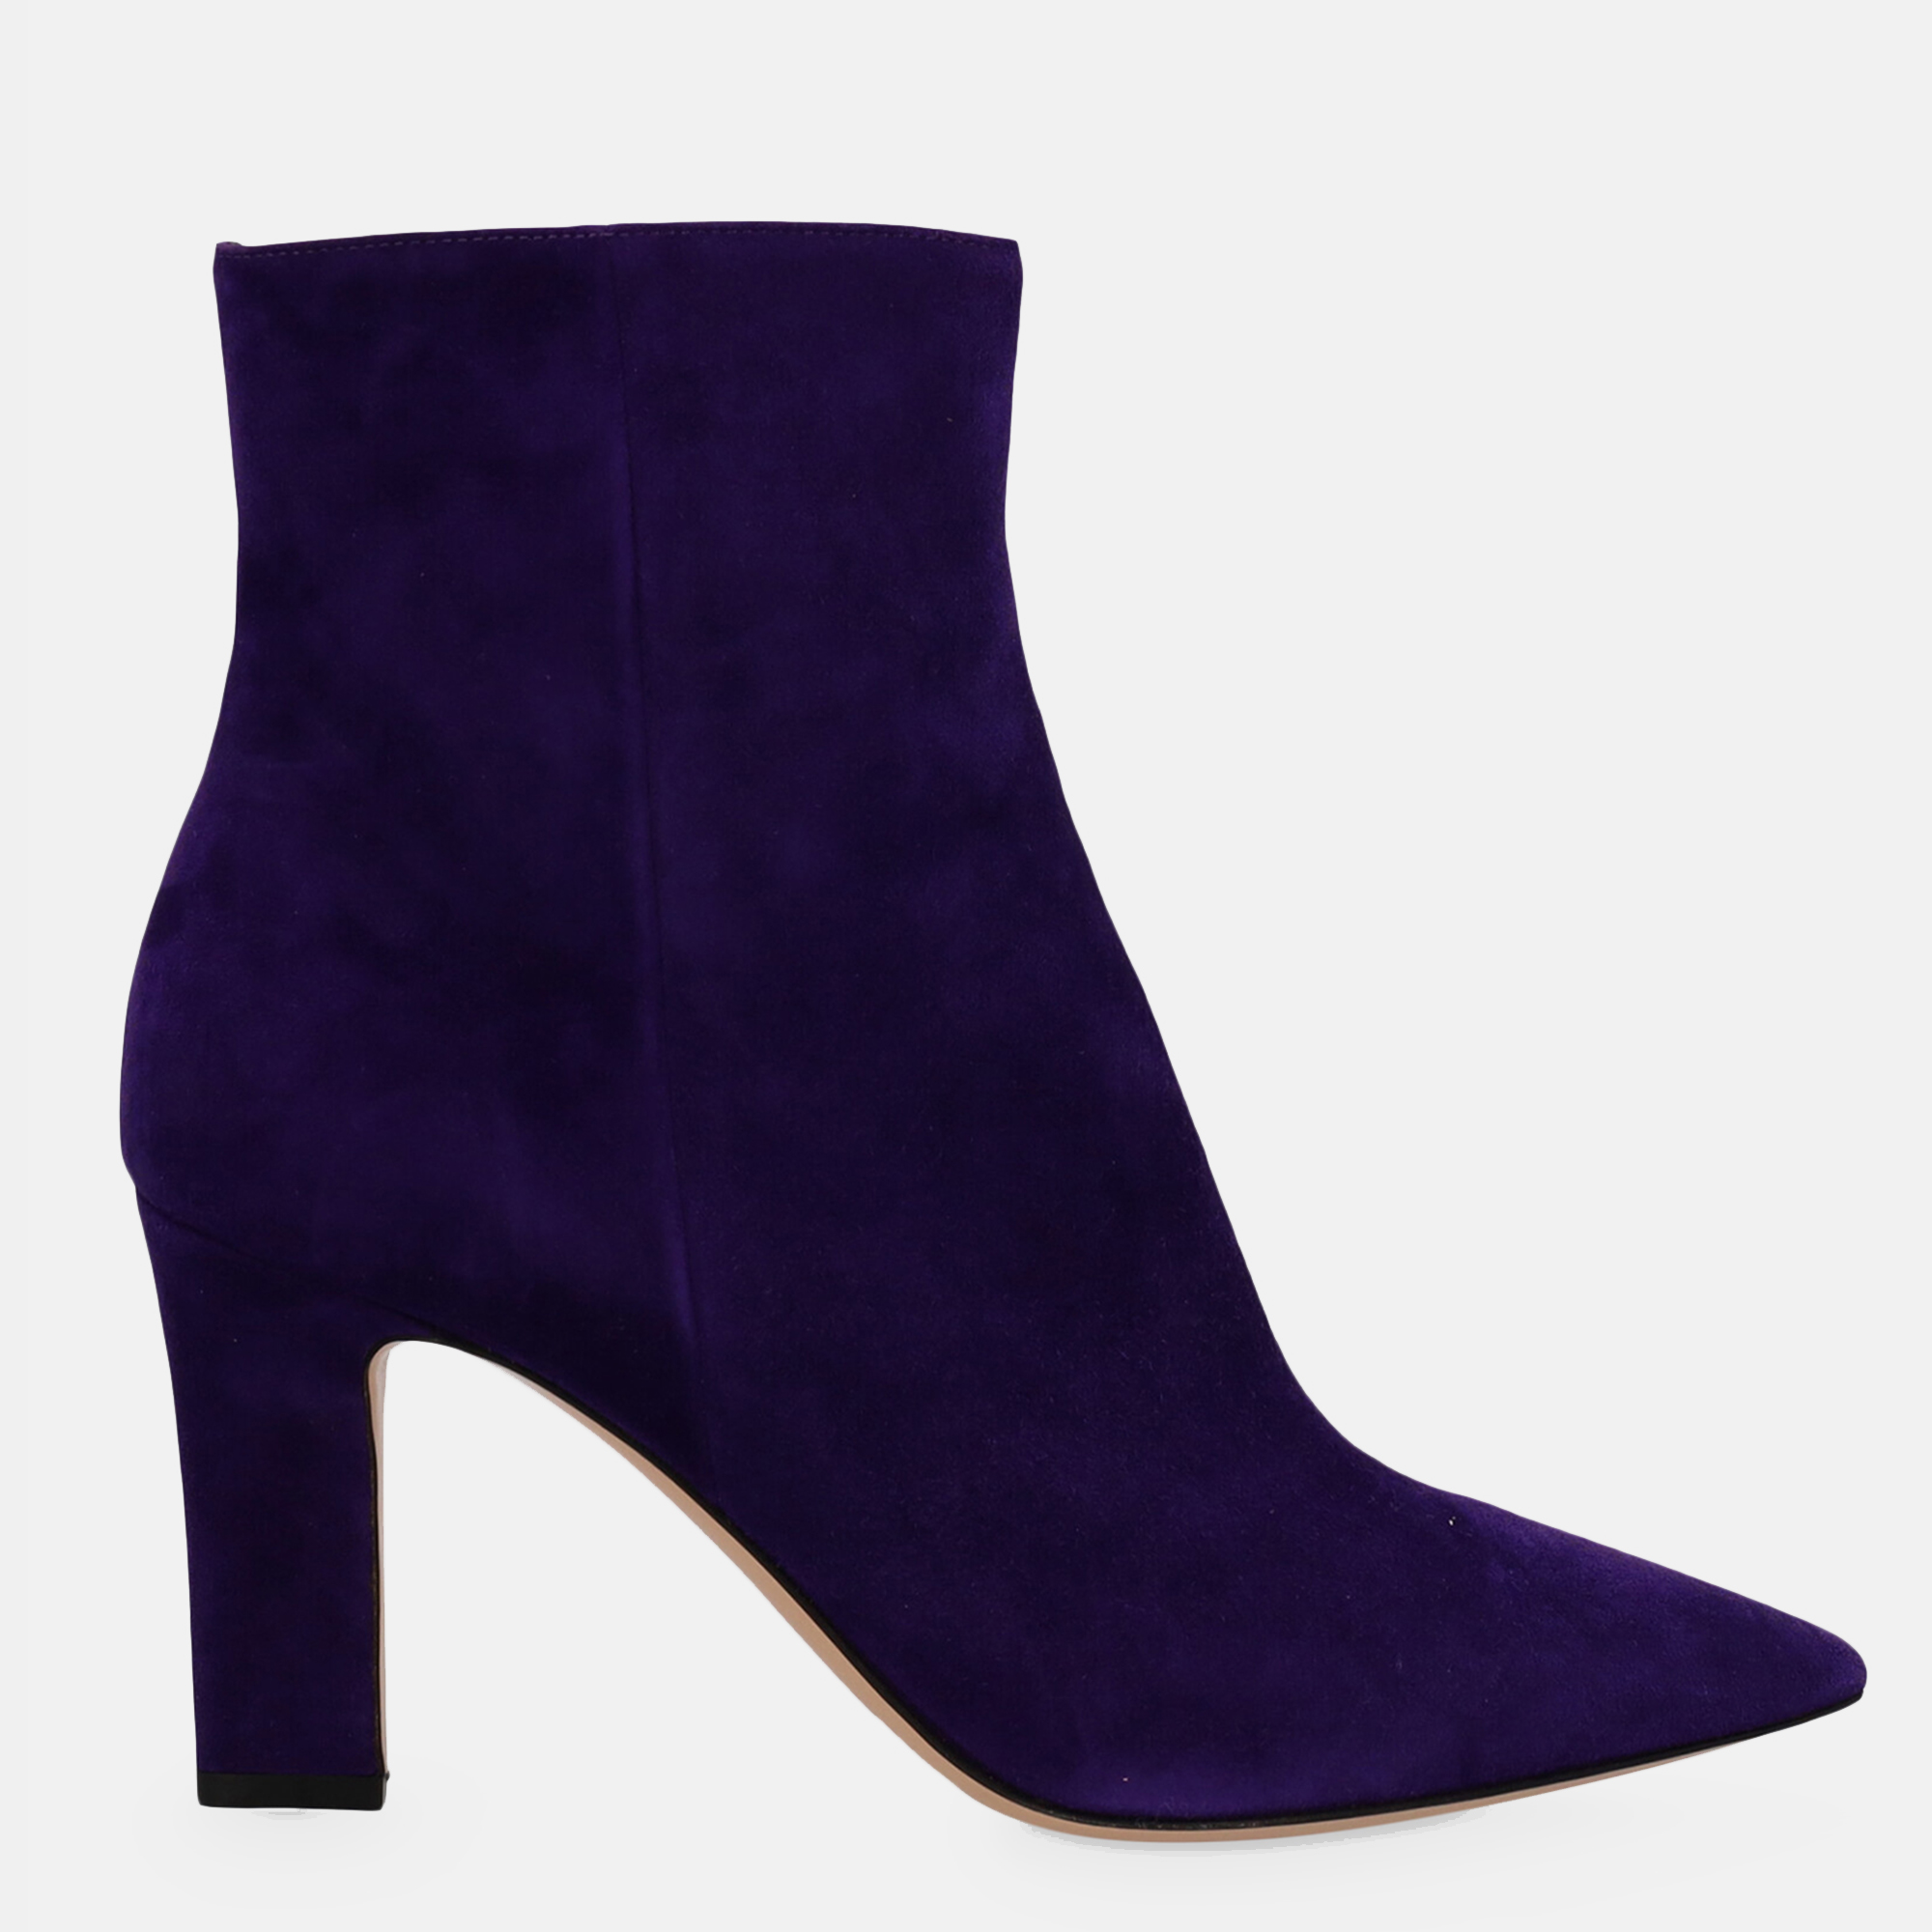 Gianvito Rossi  Women's Leather Ankle Boots - Purple - EU 40